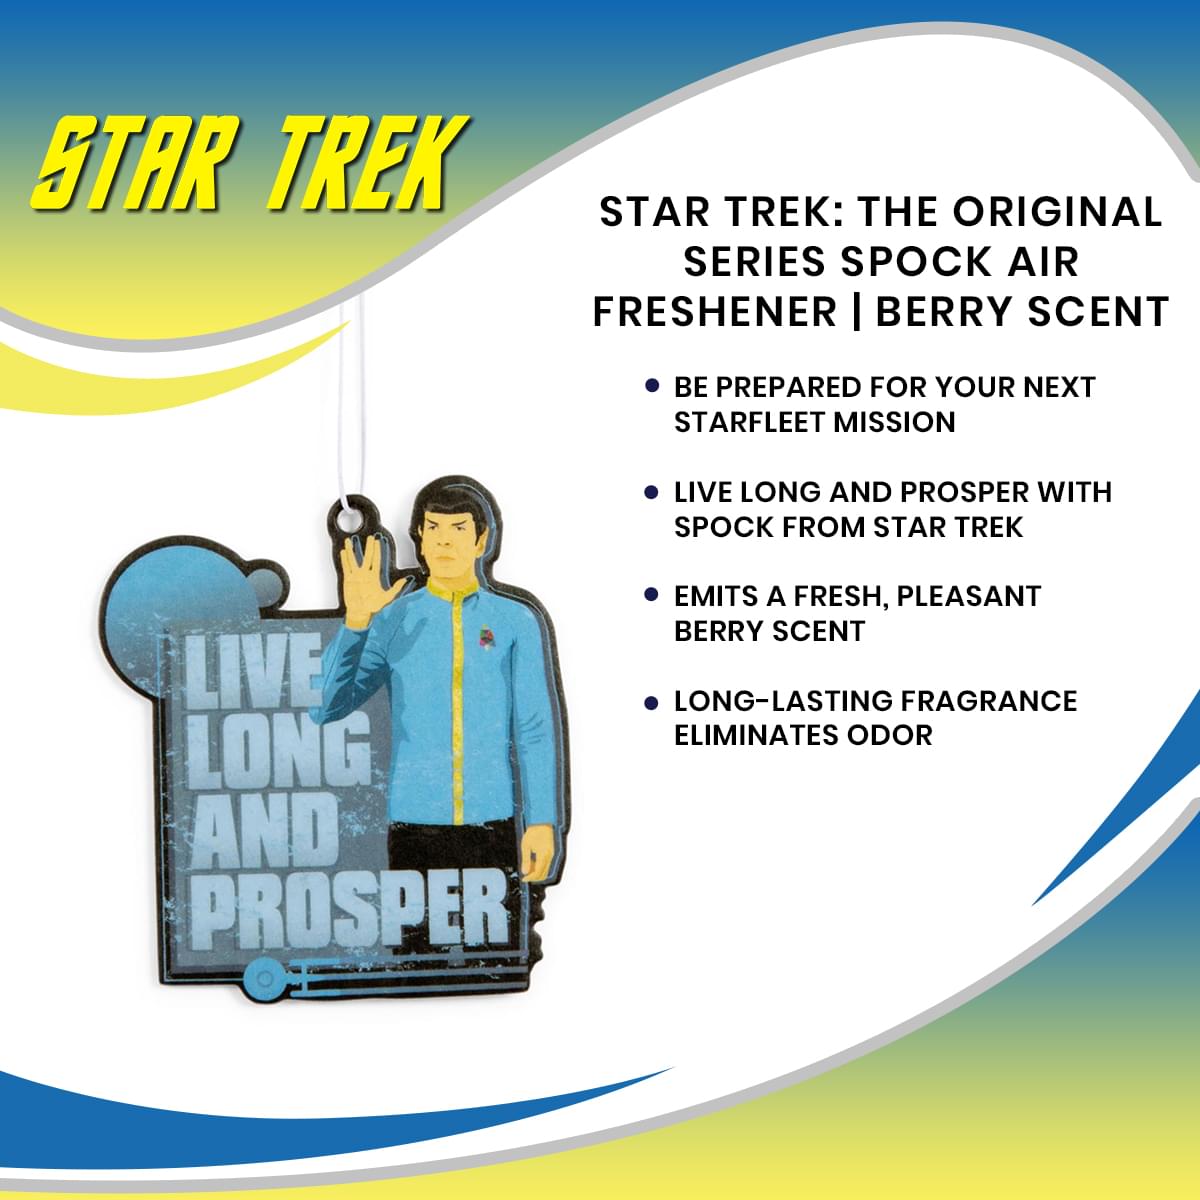 Star Trek: The Original Series Spock Air Freshener | Berry Scent